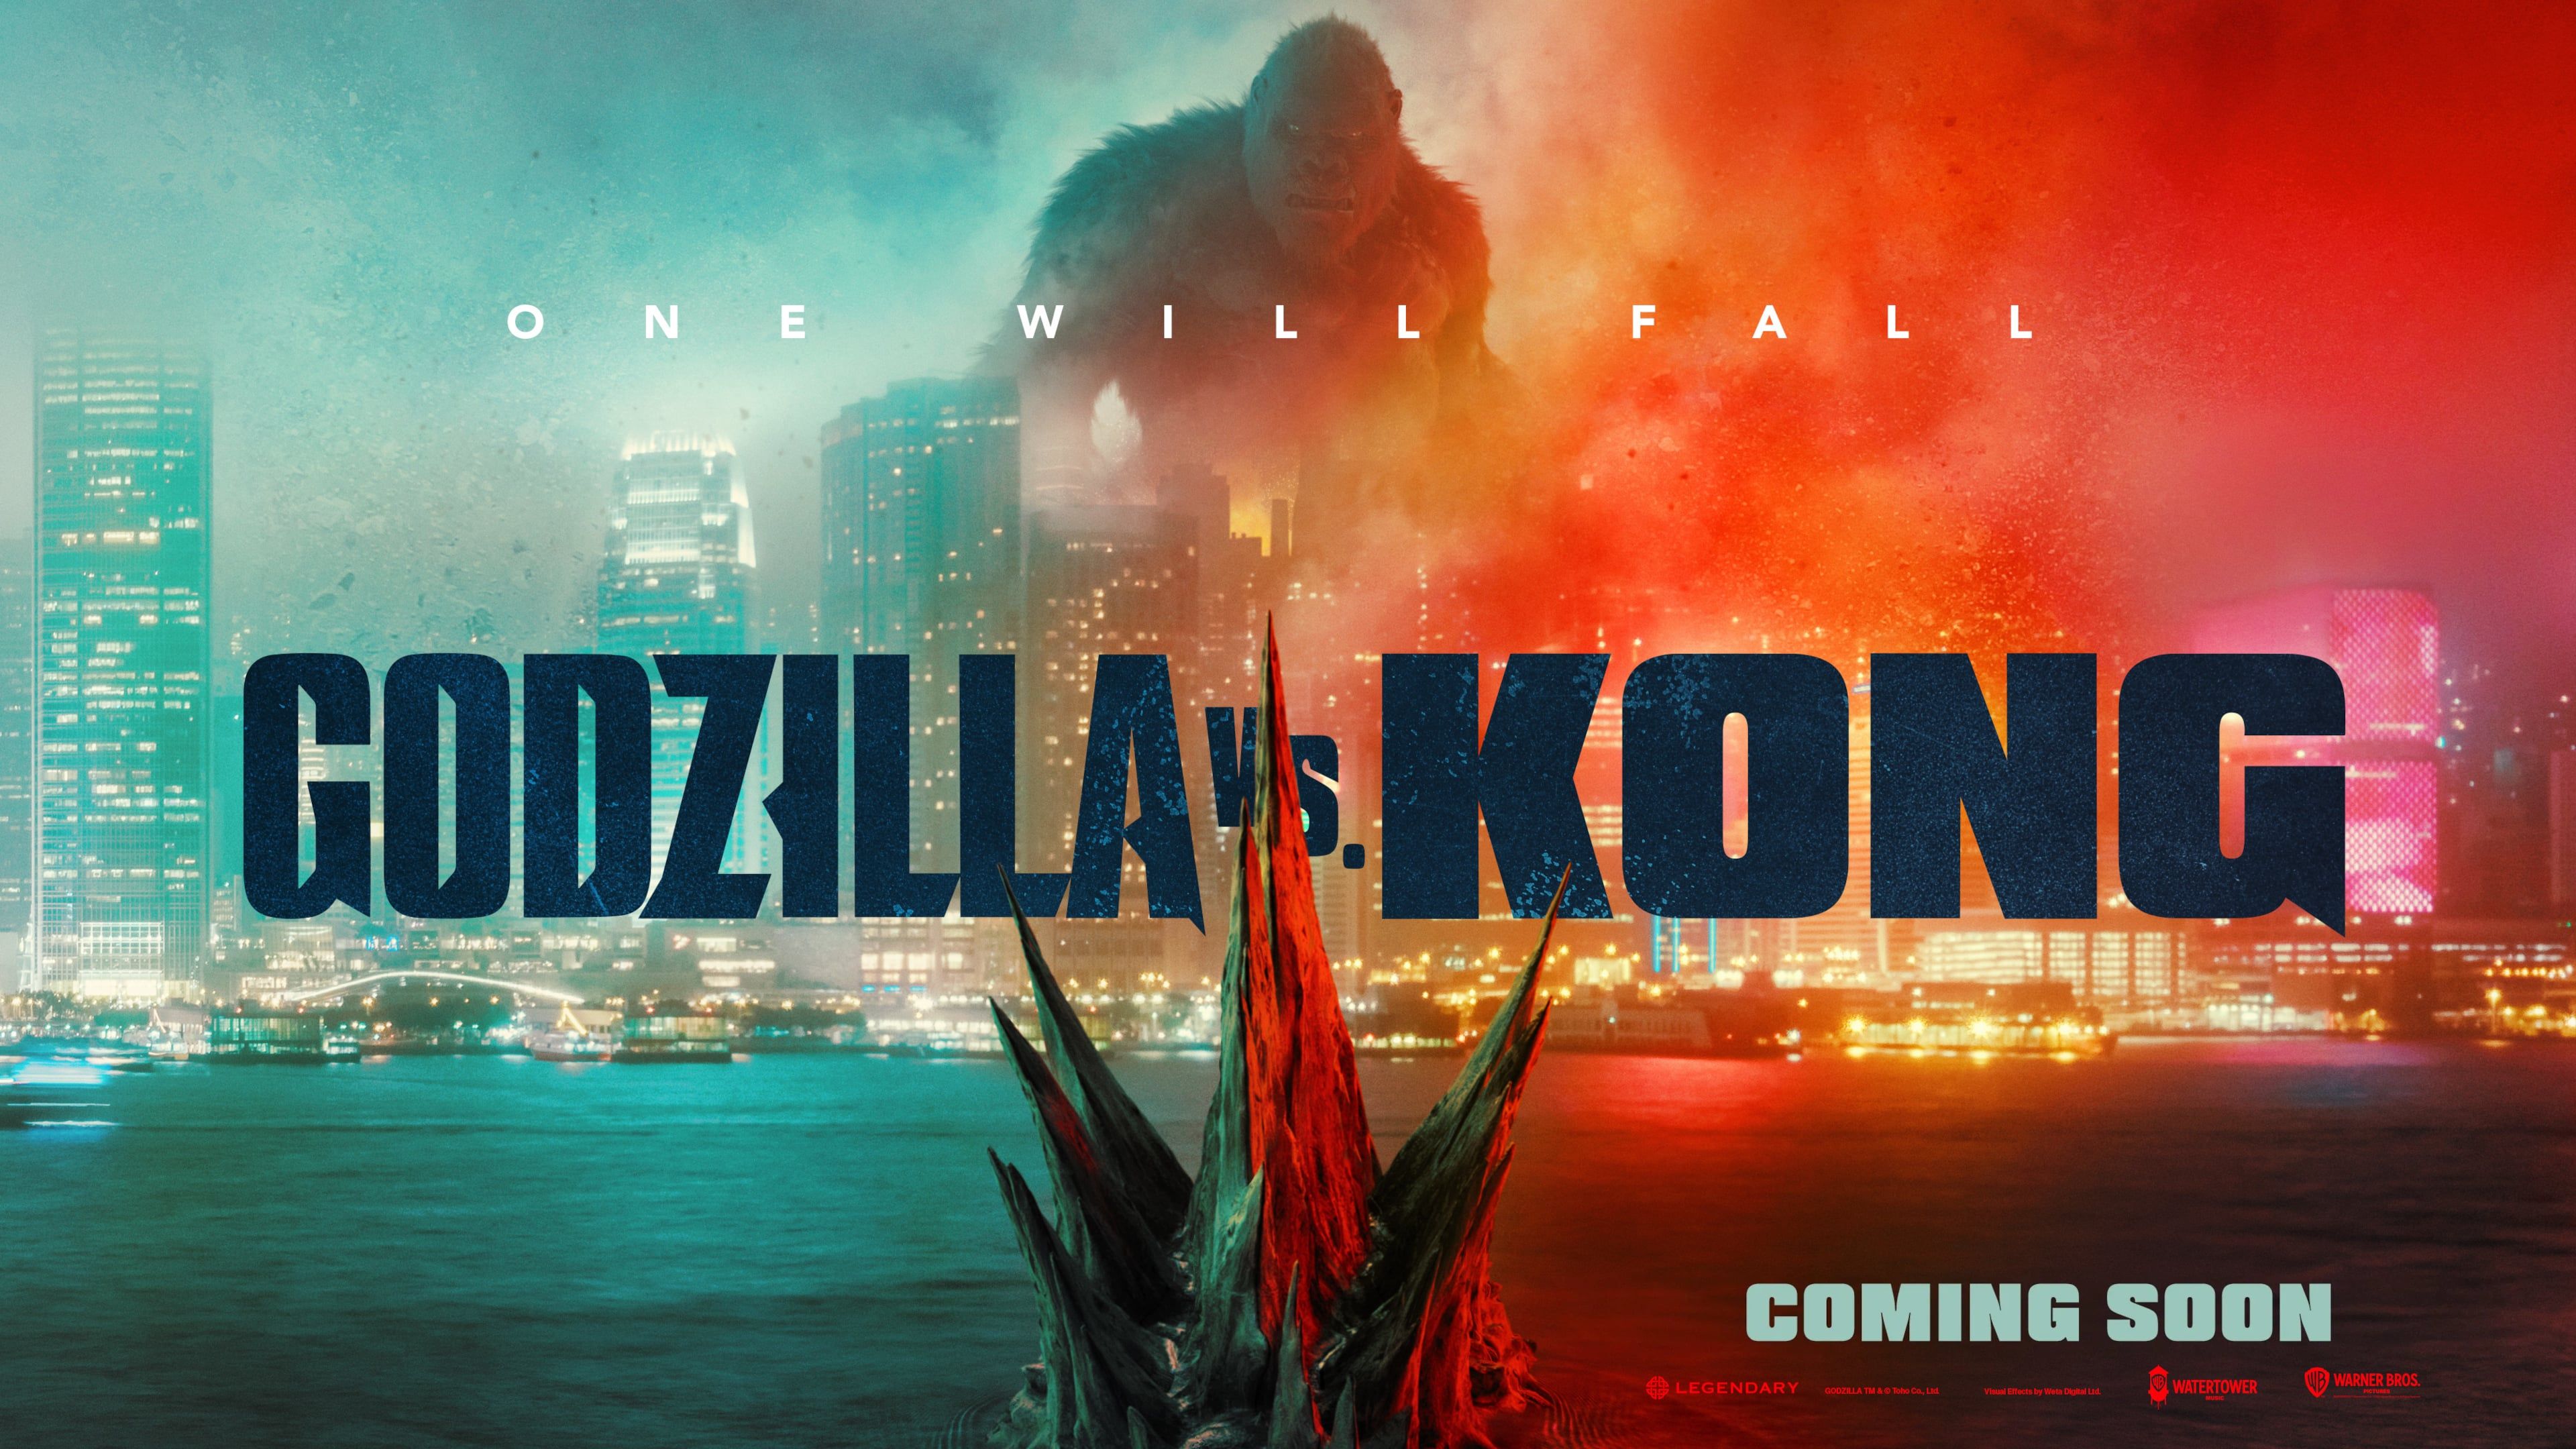 Movie, Godzilla vs Kong, Poster Wallpaper & Background Image